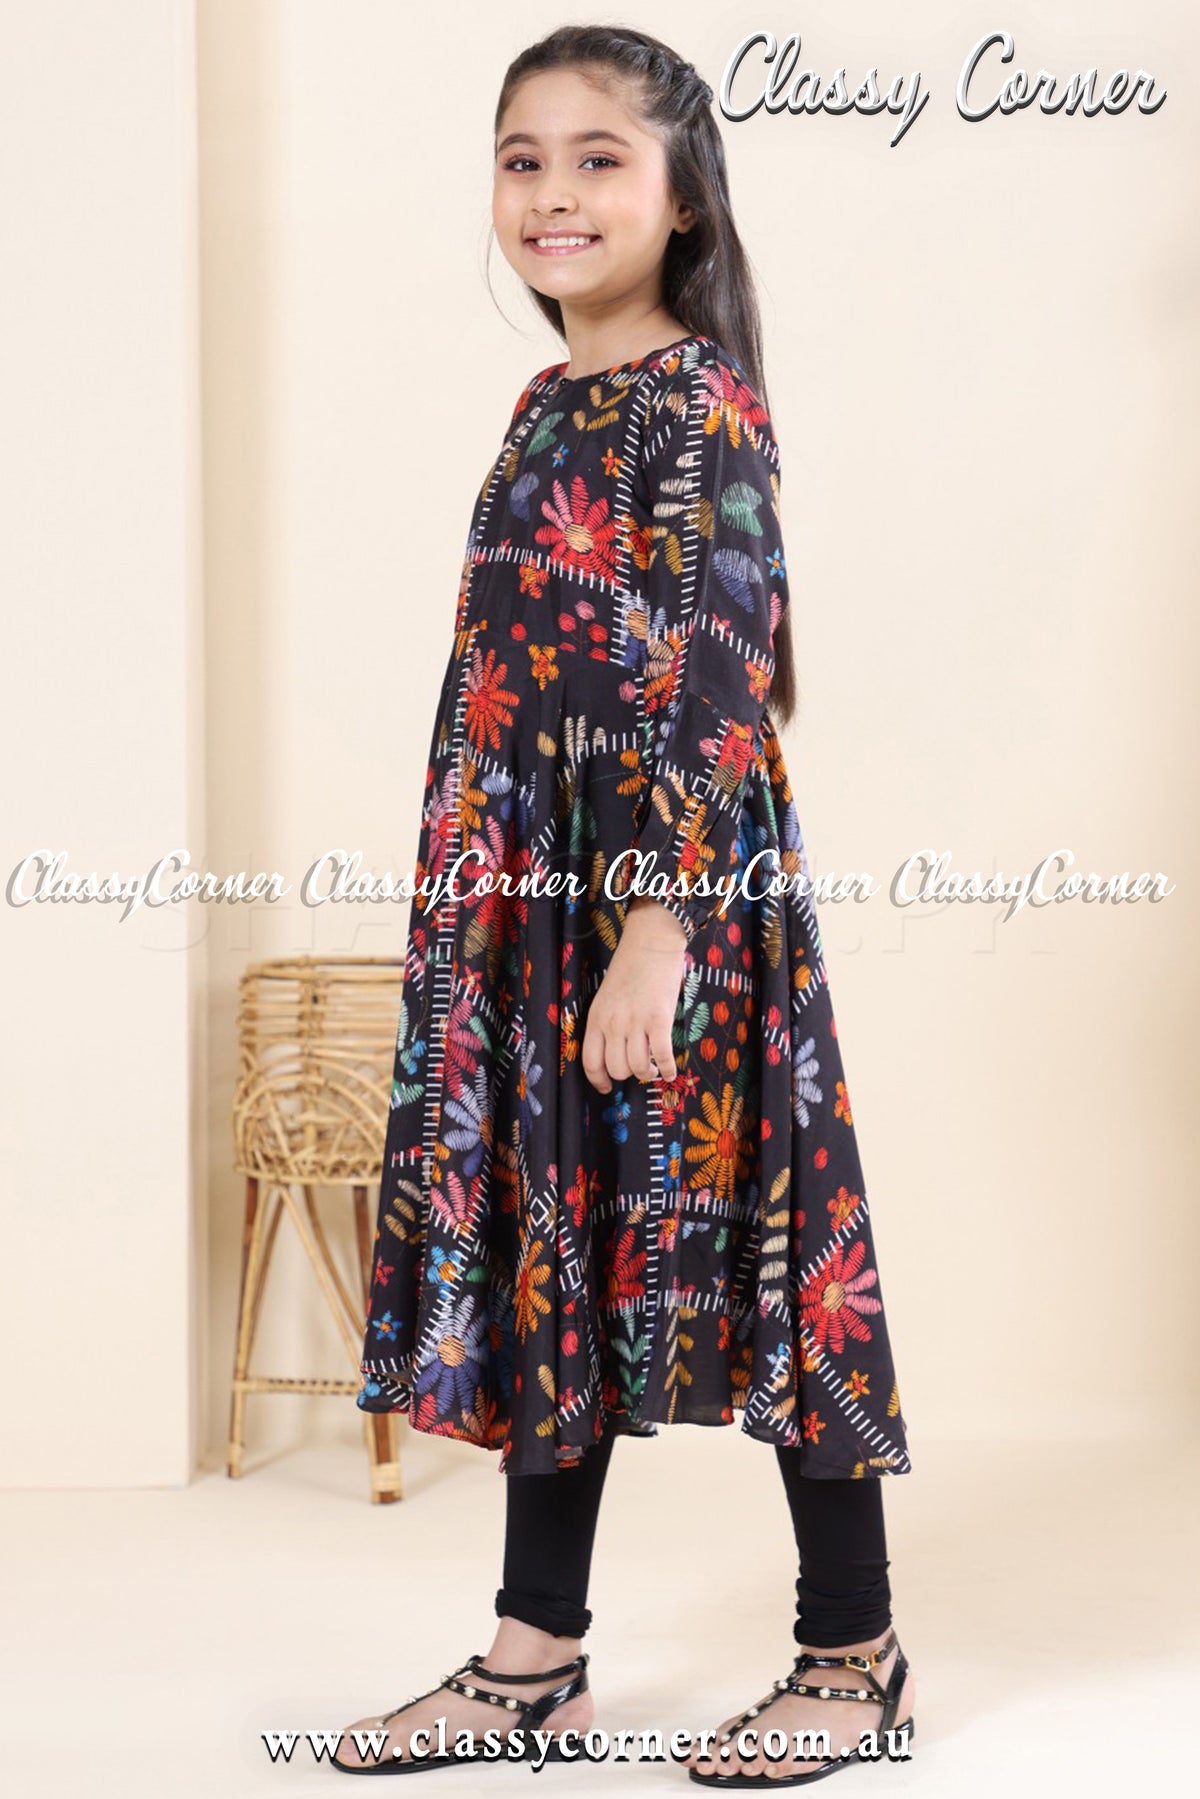 Black Multicolour Floral Print Girls Dress - Classy Corner